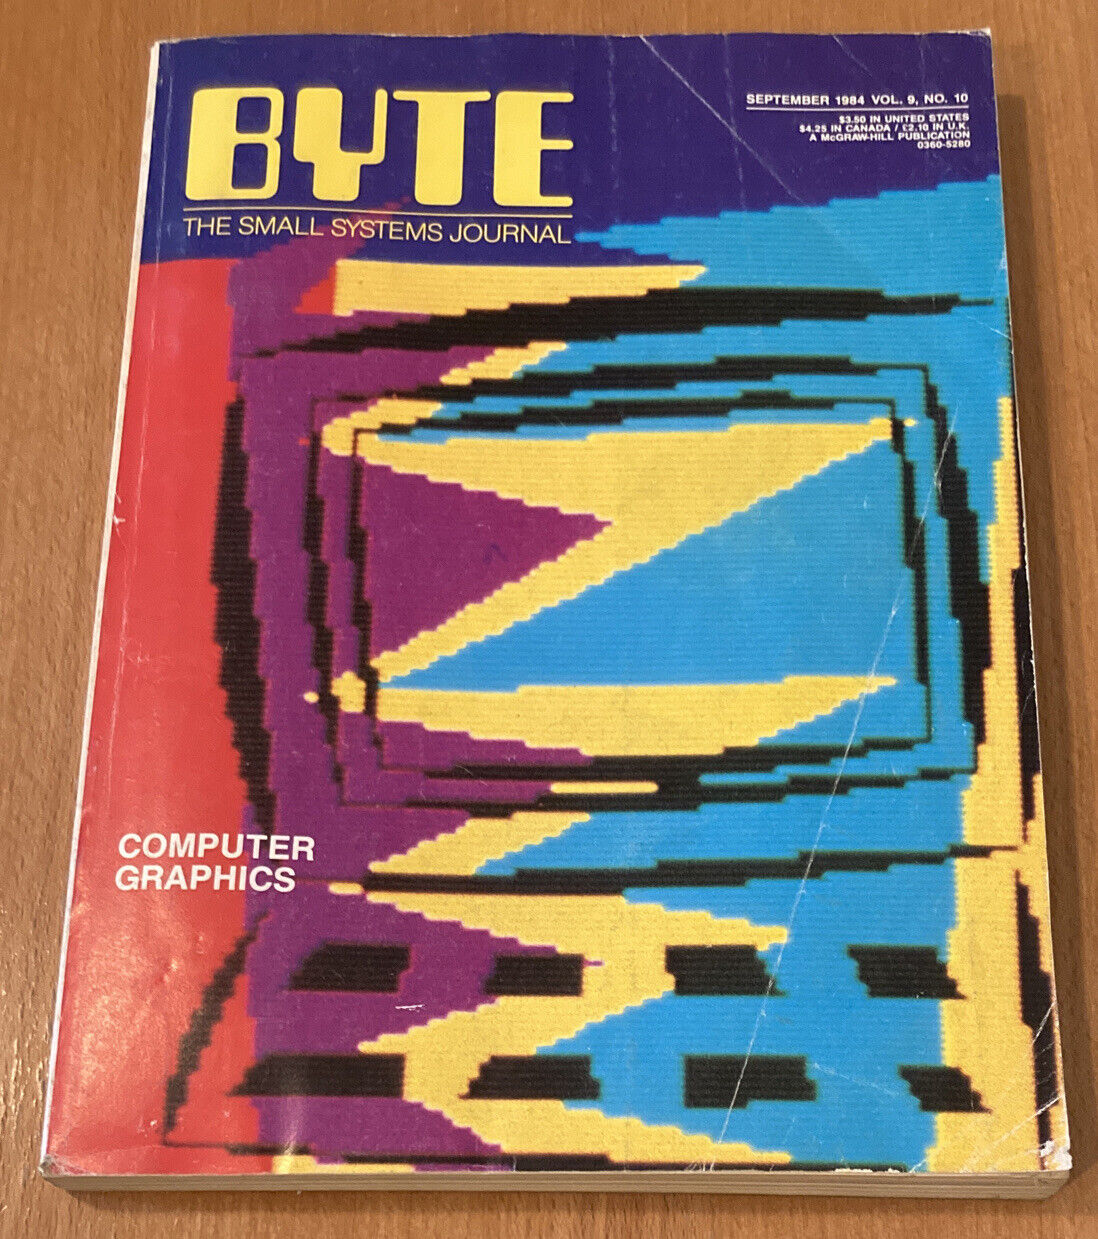 BYTE THE SMALL SYSTEMS JOURNAL MAGAZINE September  1984 VOL. 9 NO. 10